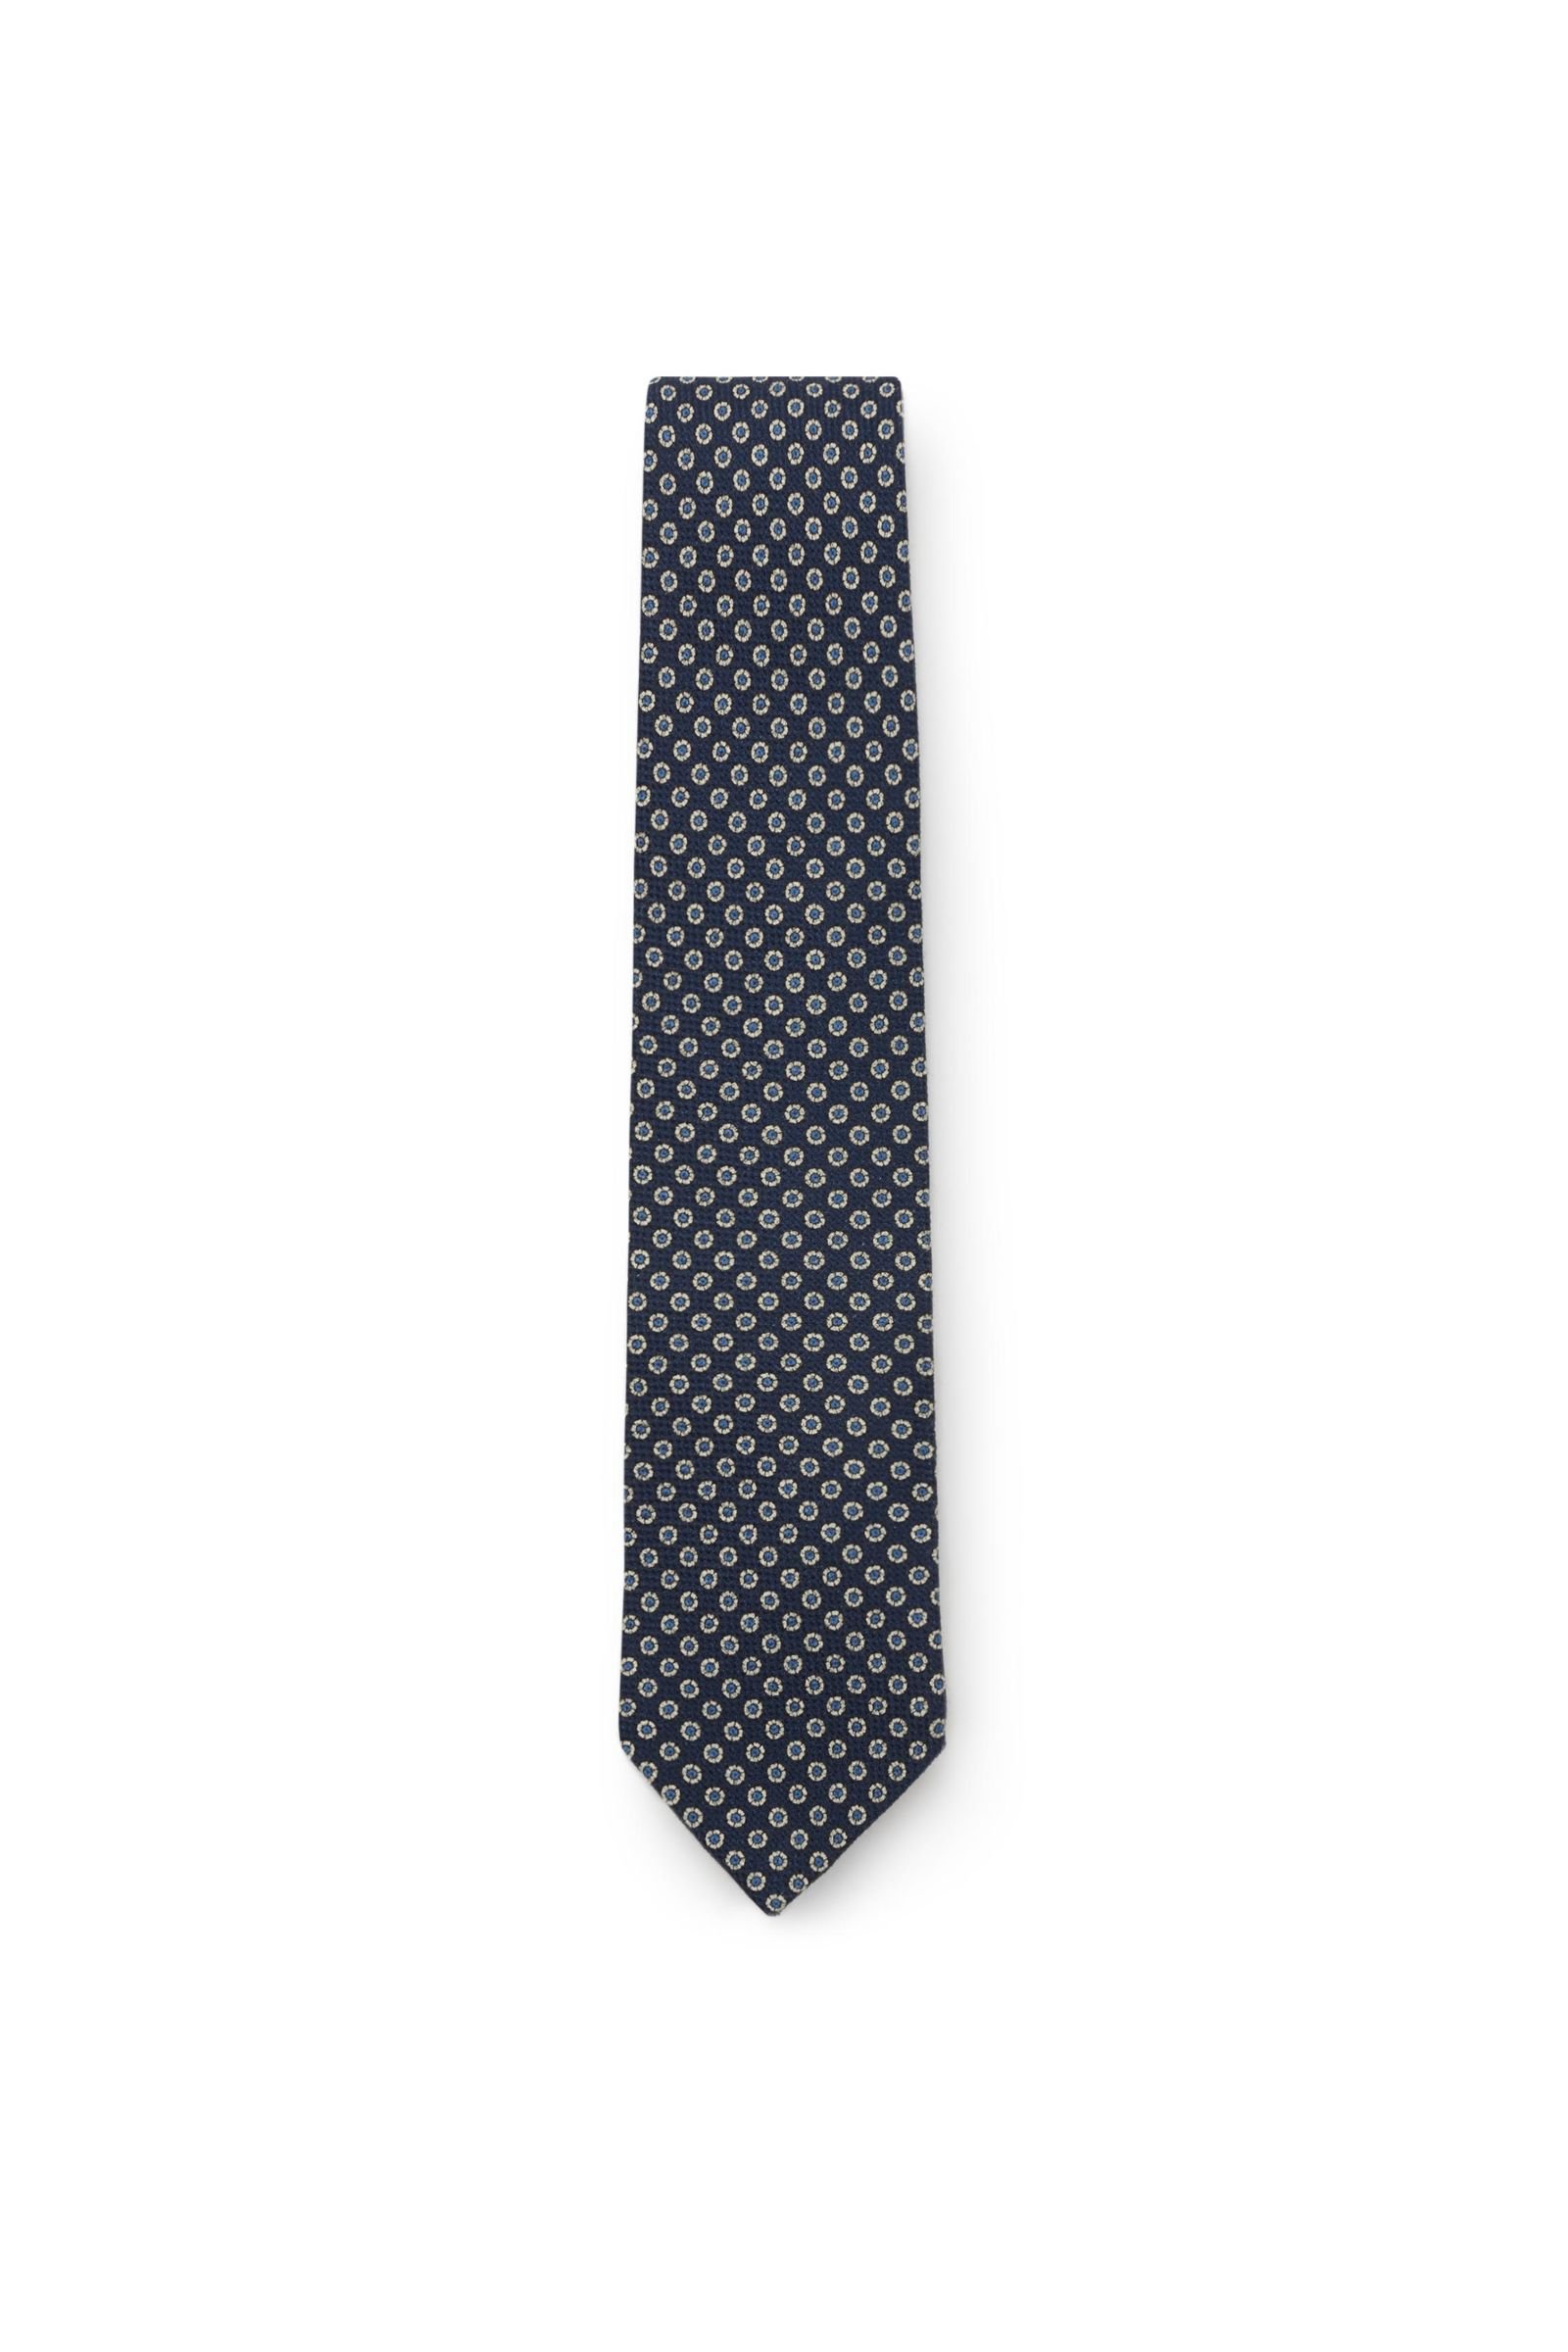 Krawatte dark navy gemustert